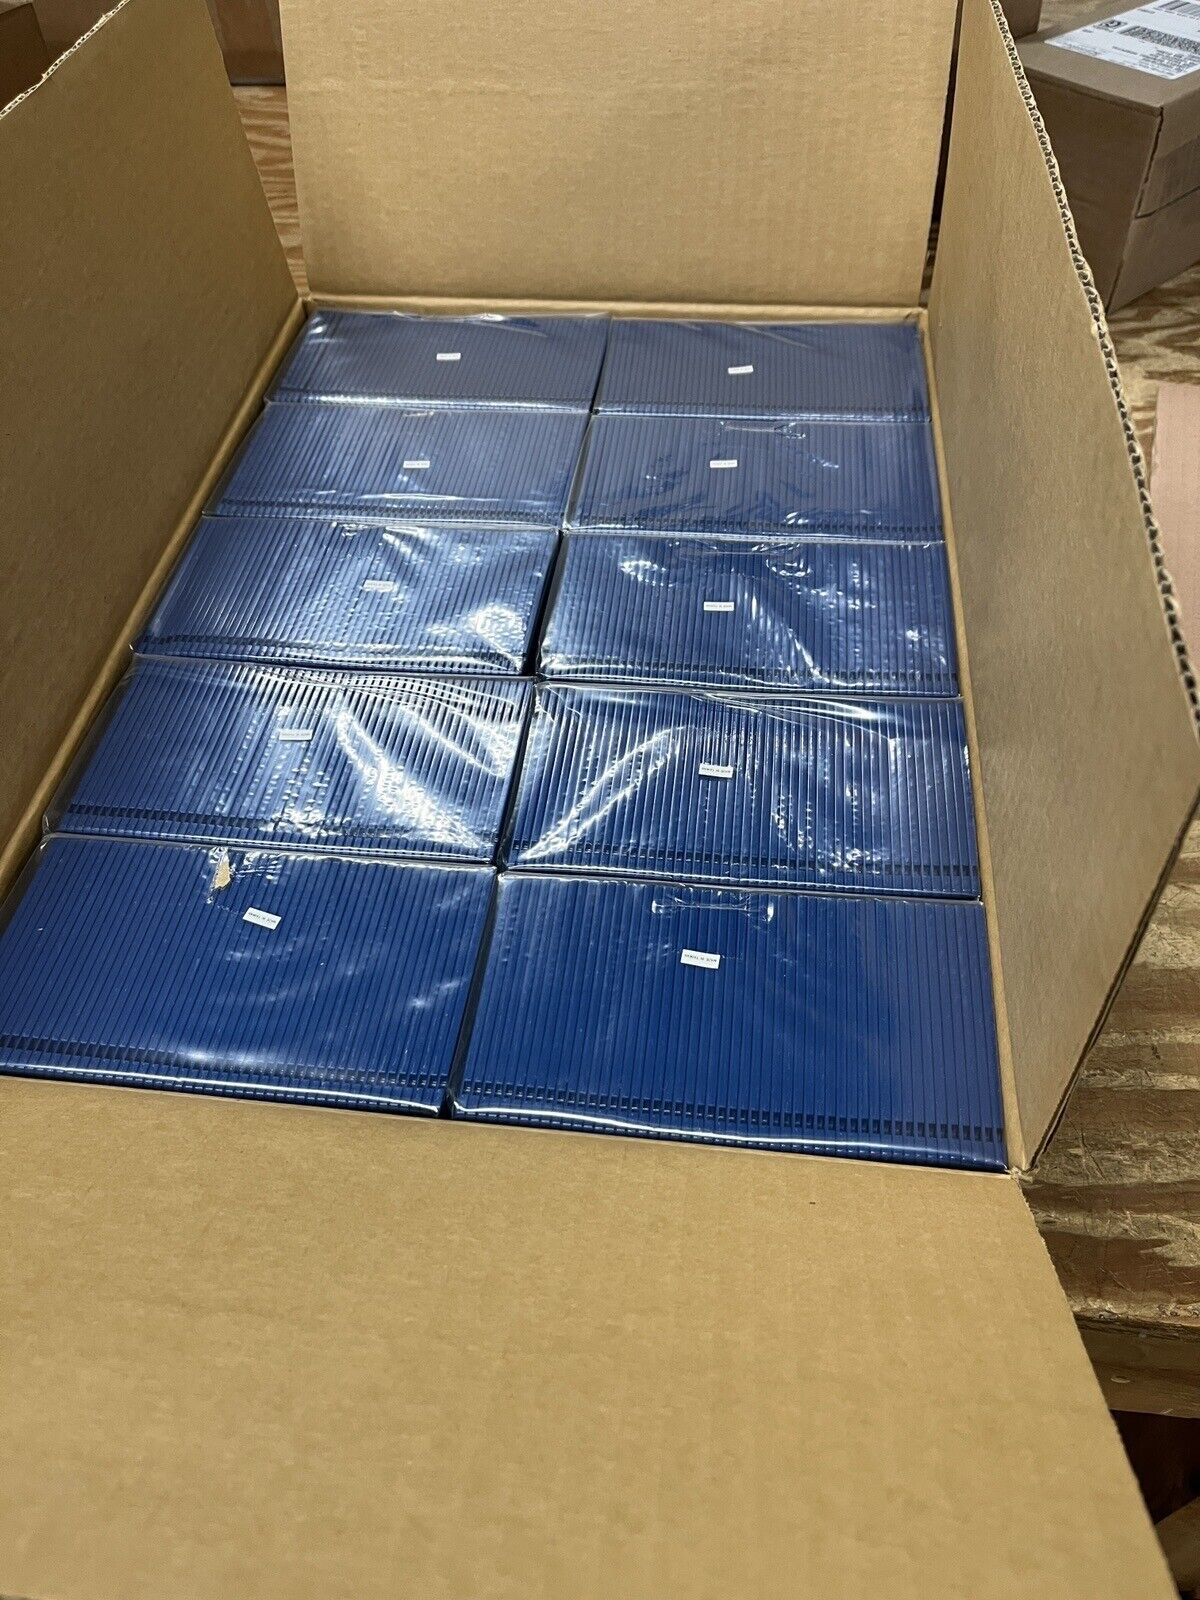 3.5” HD floppy disk 3.5 lot - Blue, qty 500